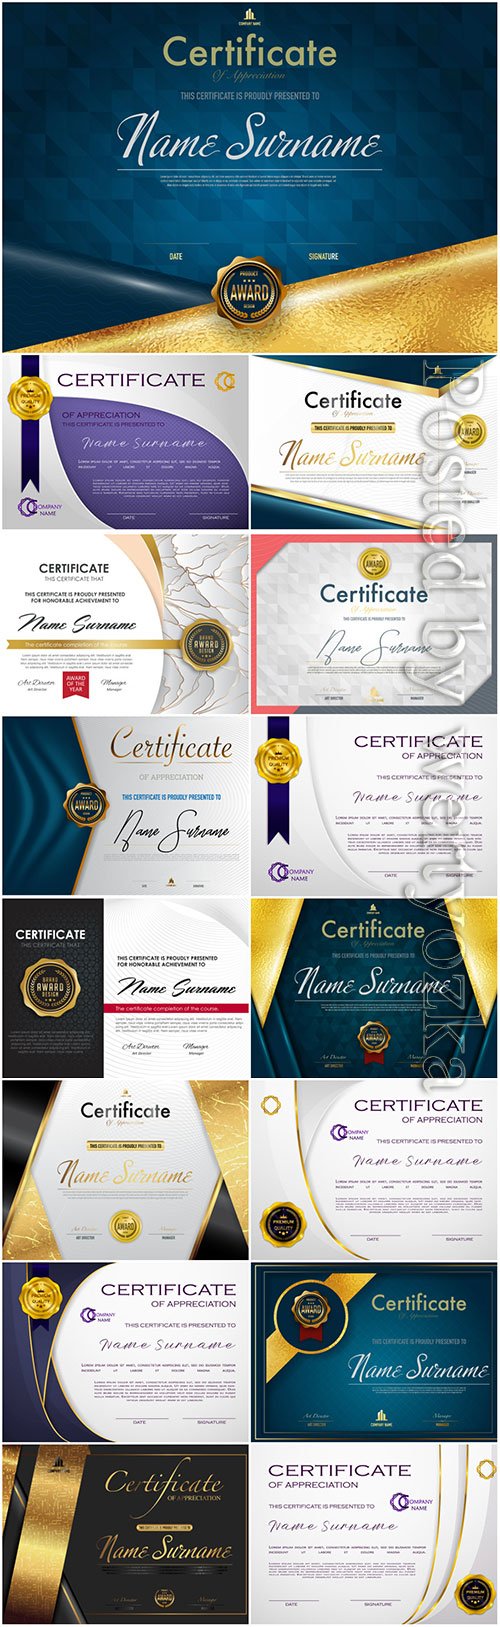 Certificates templates design vector